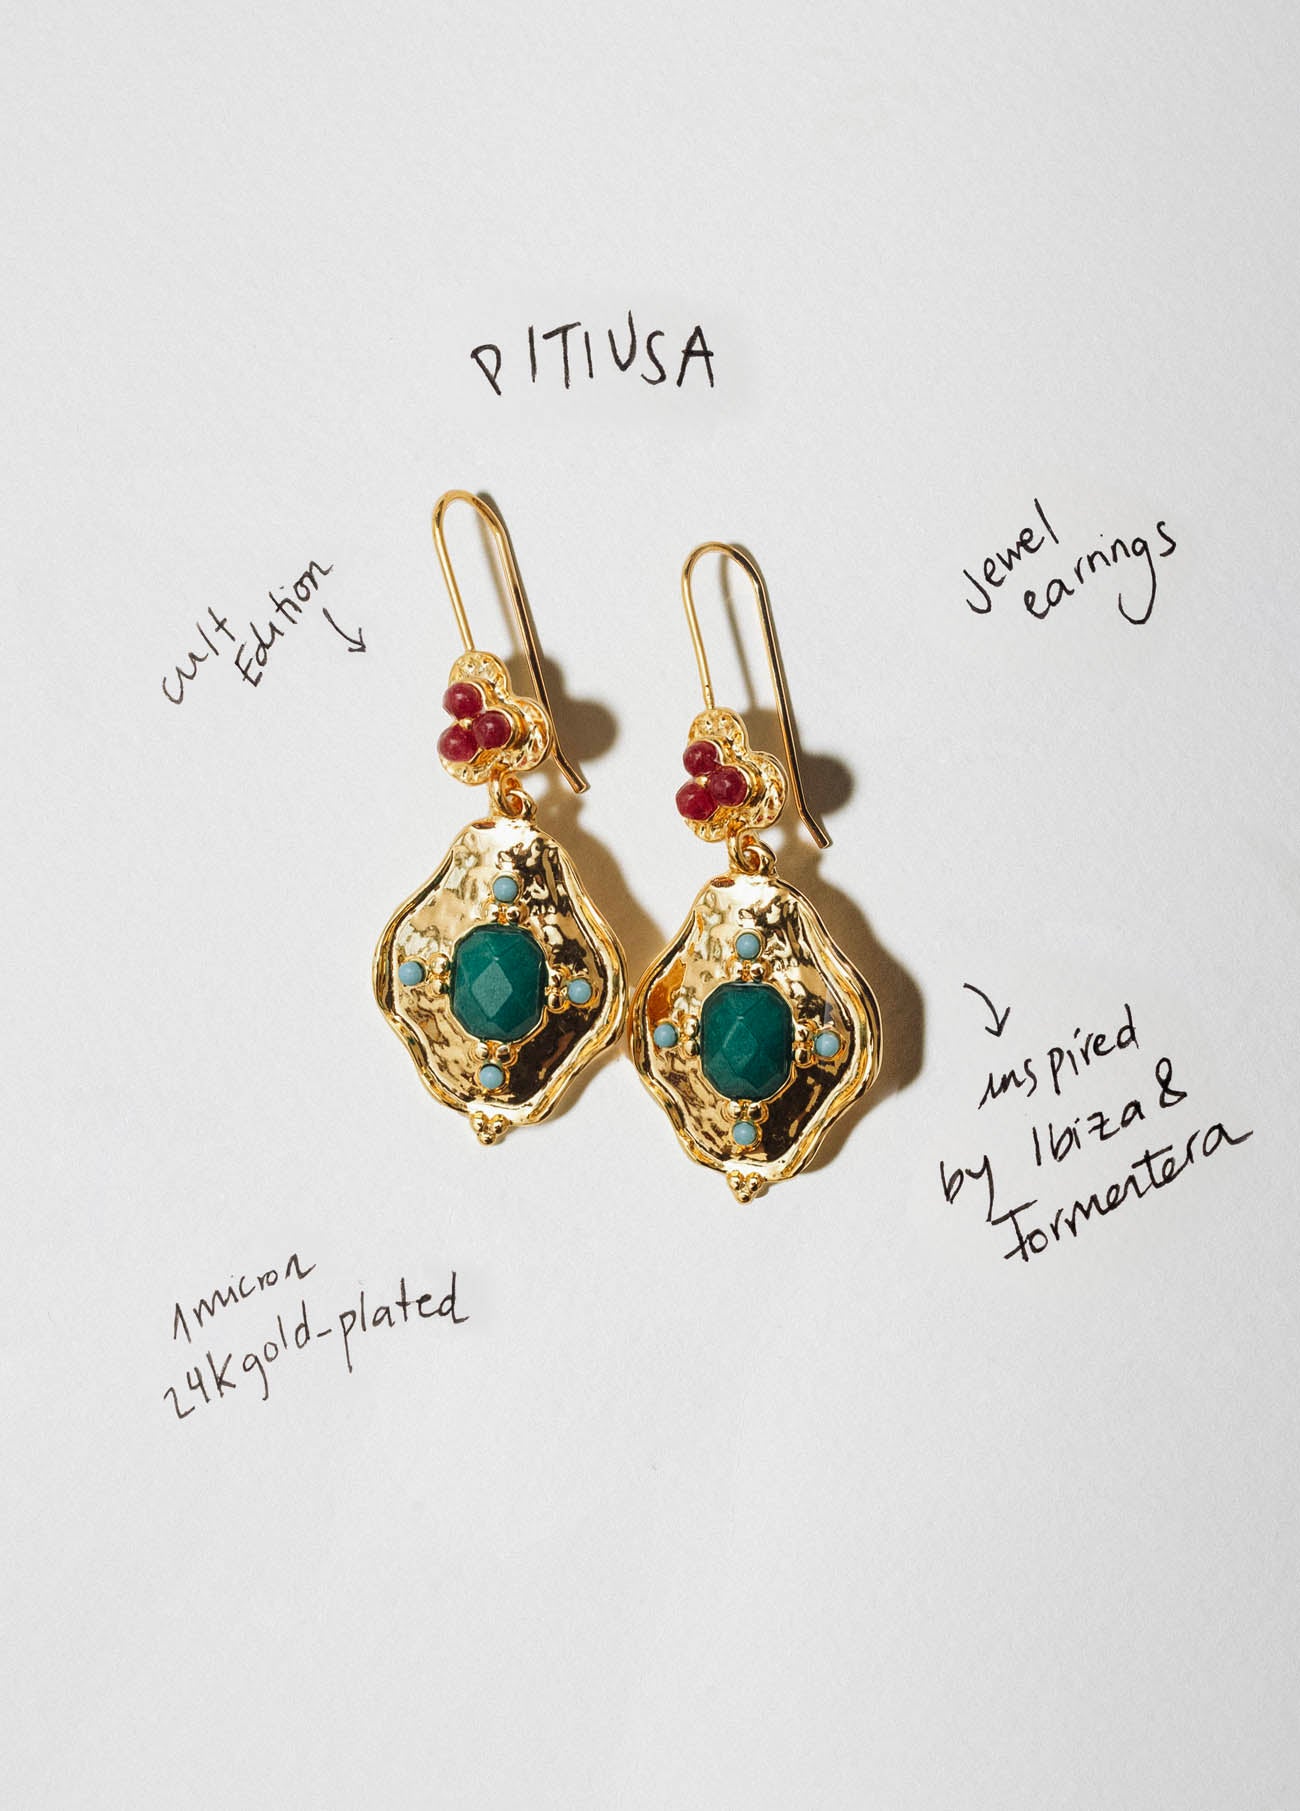 Pitiusa earrings